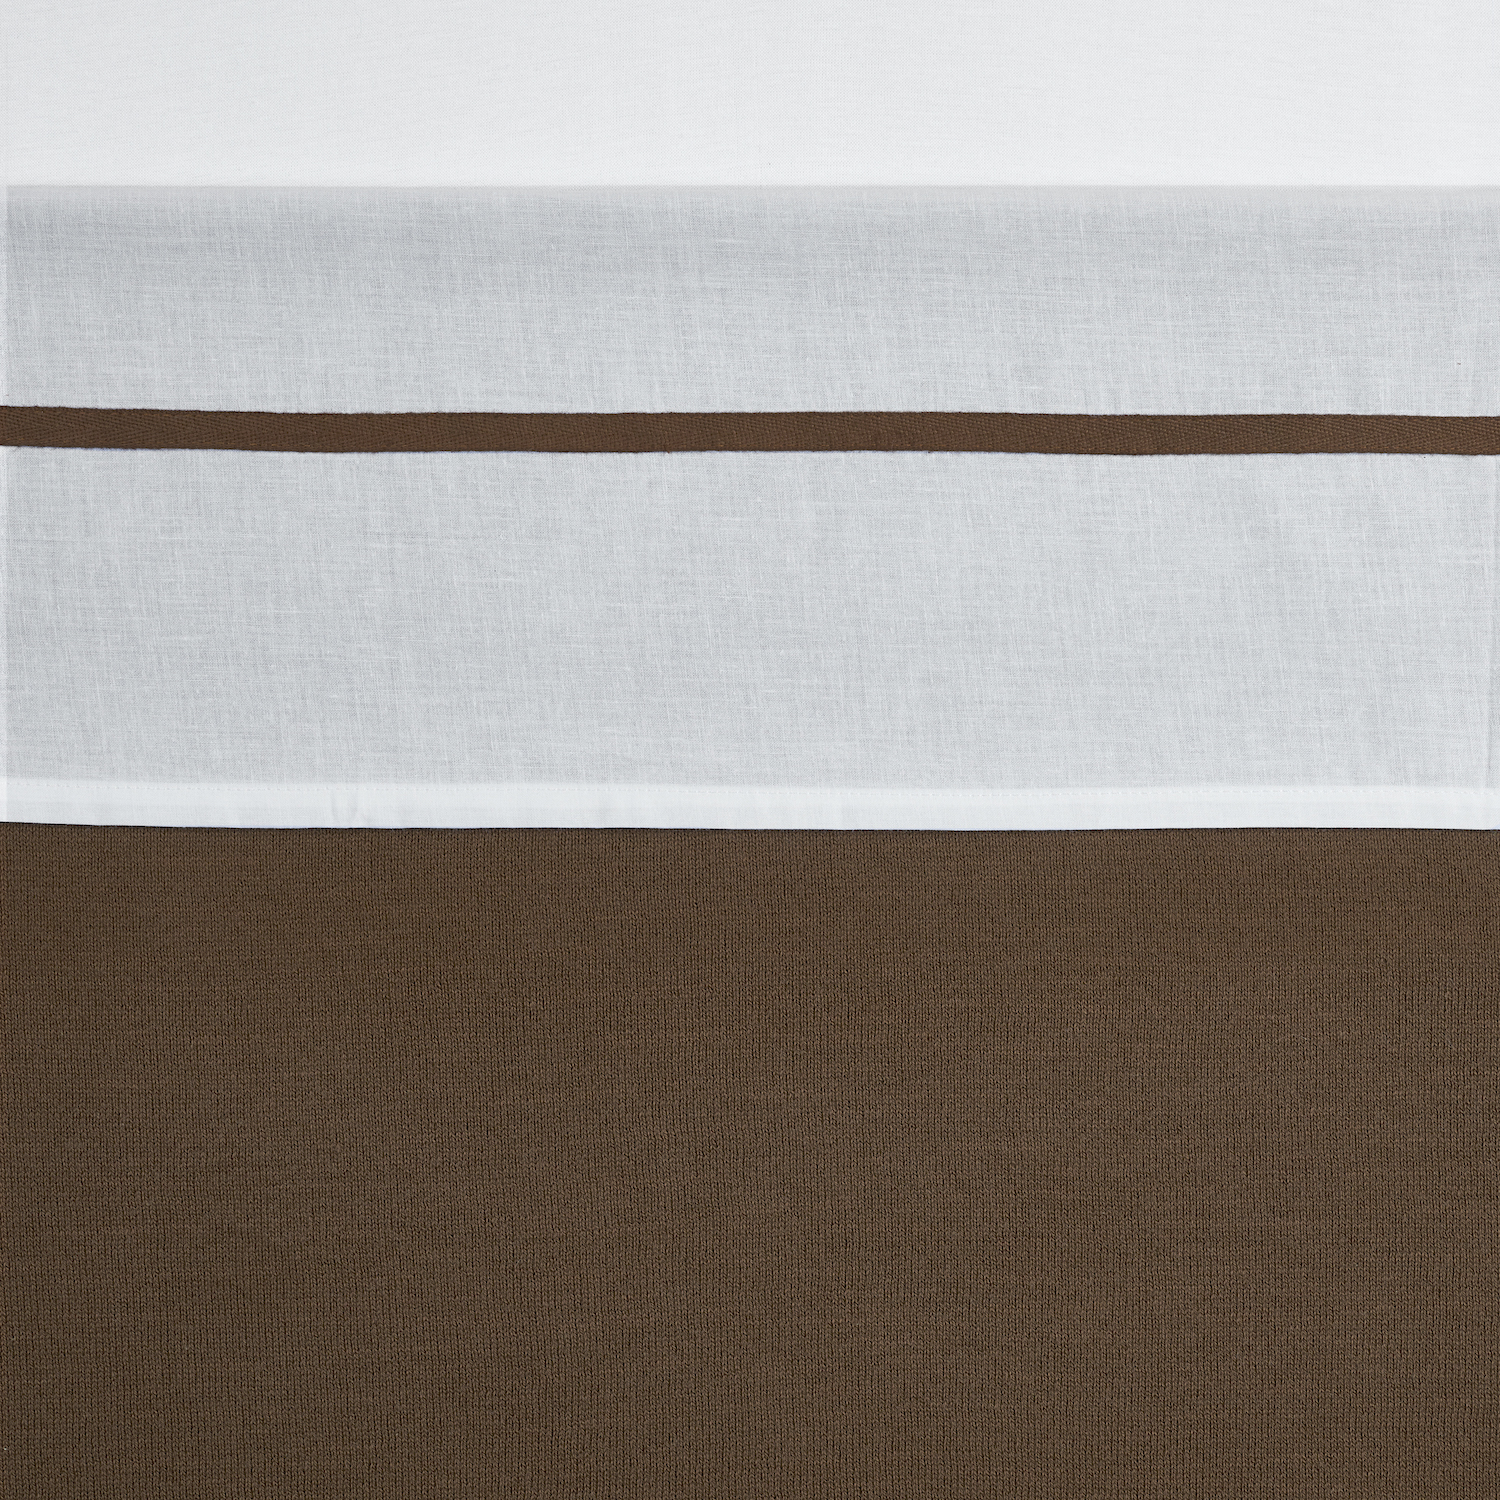 Cot bed sheet Bies - chocolate - 100x150cm